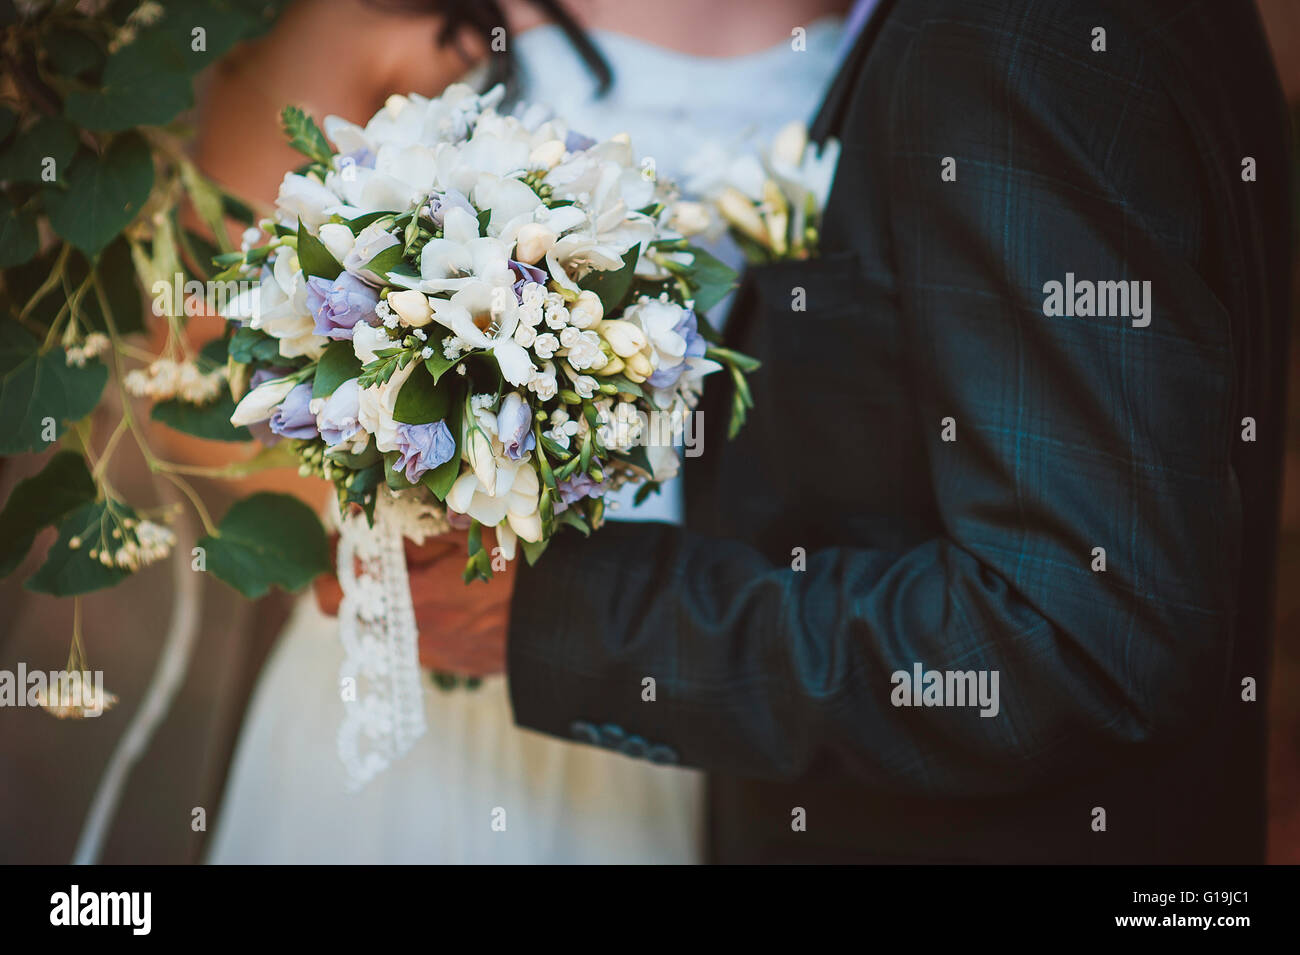 bouquet of wedding flowers Stock Photo